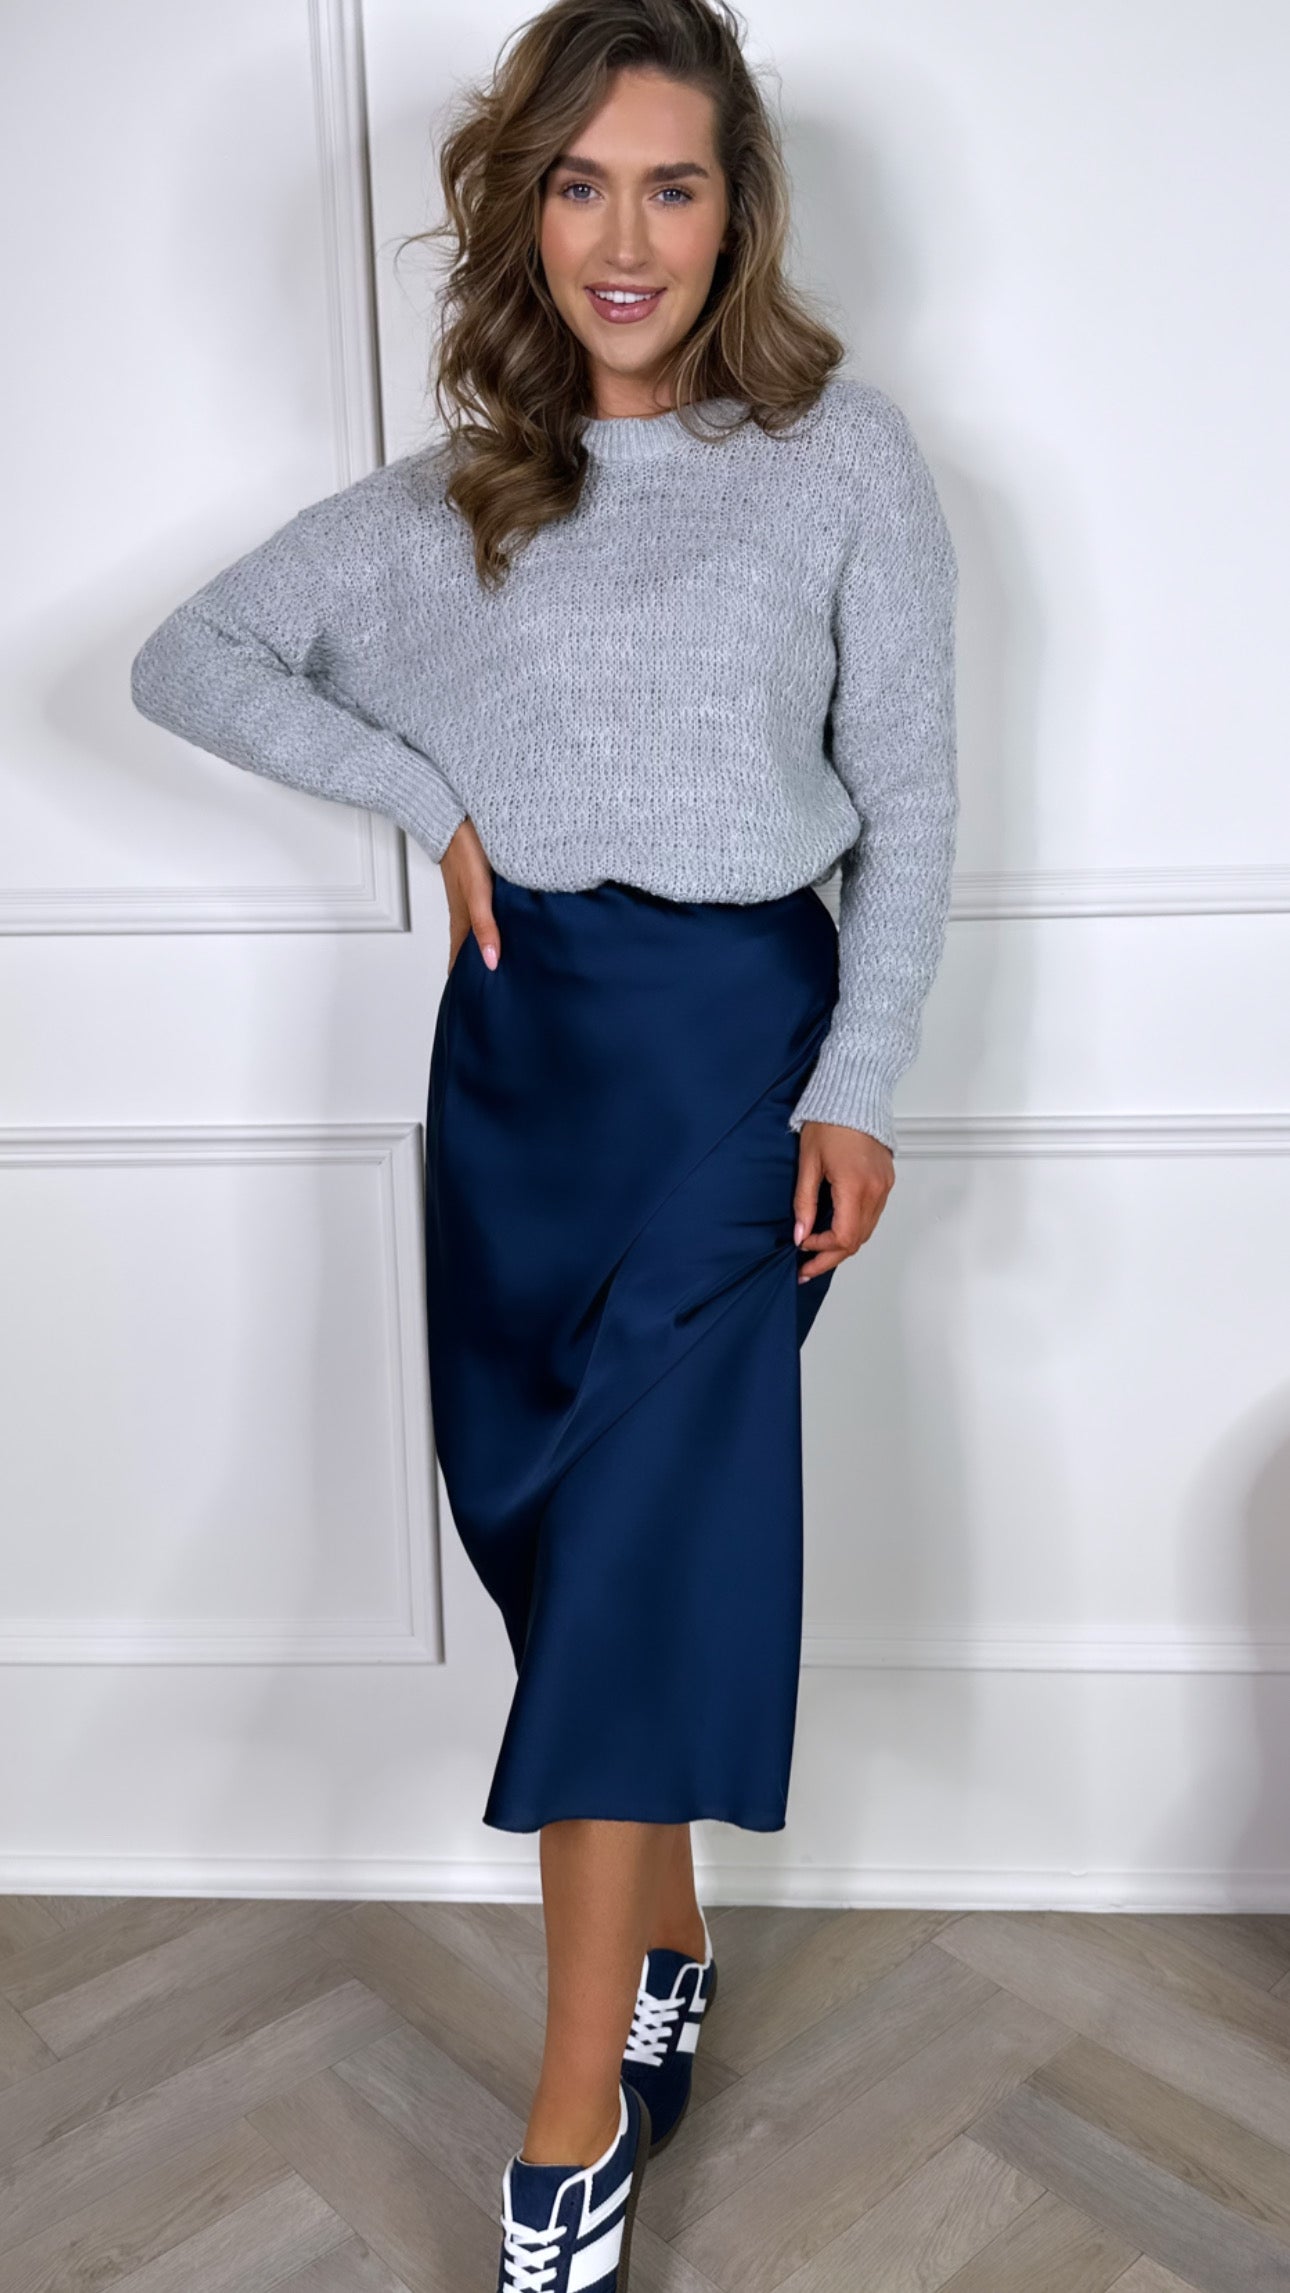 Yaella Blue Midi Skirt – Get That Trend